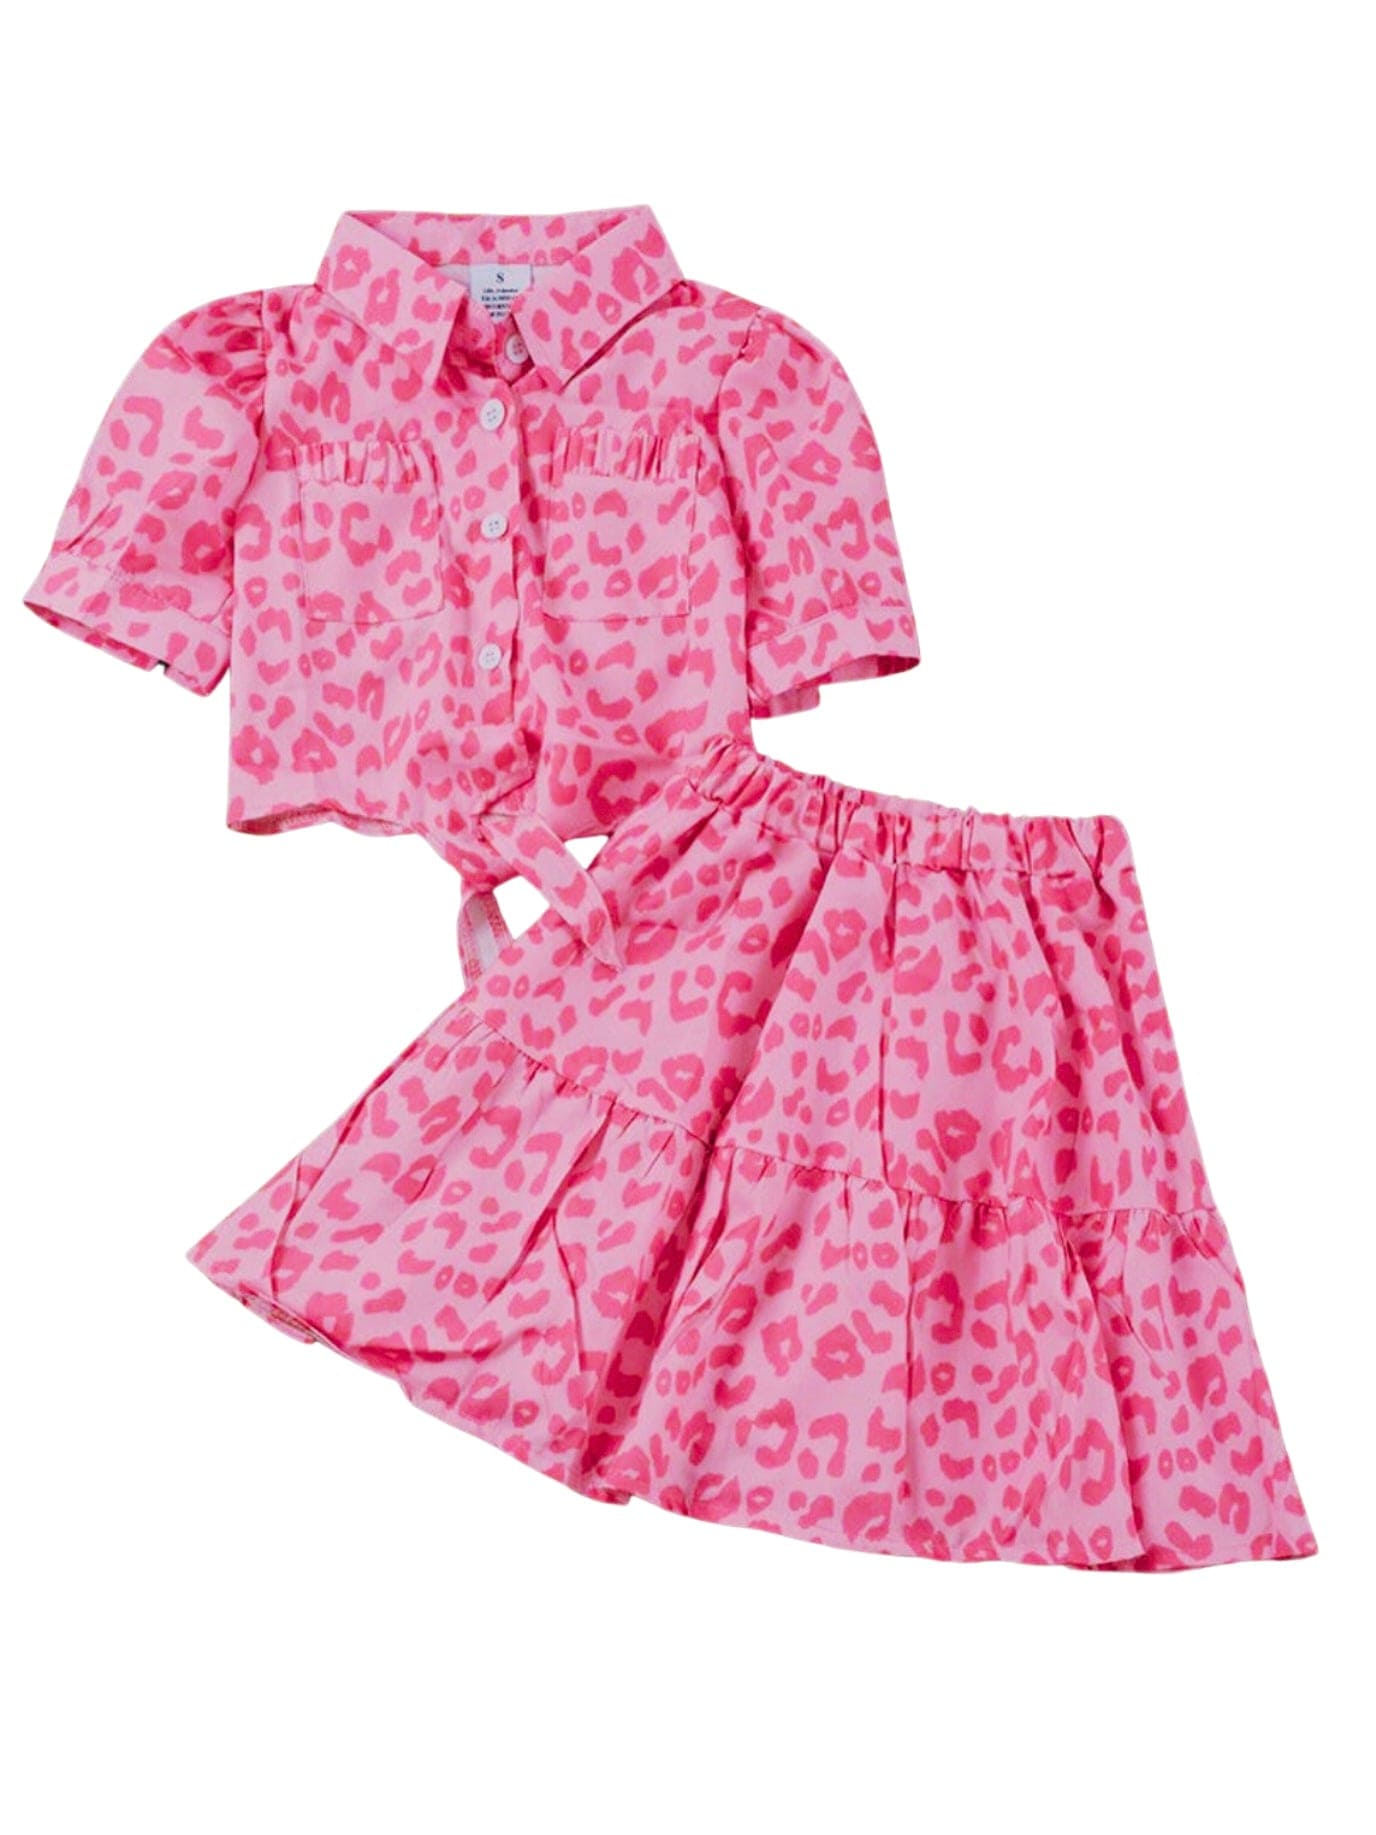 Fashionably, BBK! Outfit Sets 12-18 M (XS) Girls Pink Cheetah Print Set